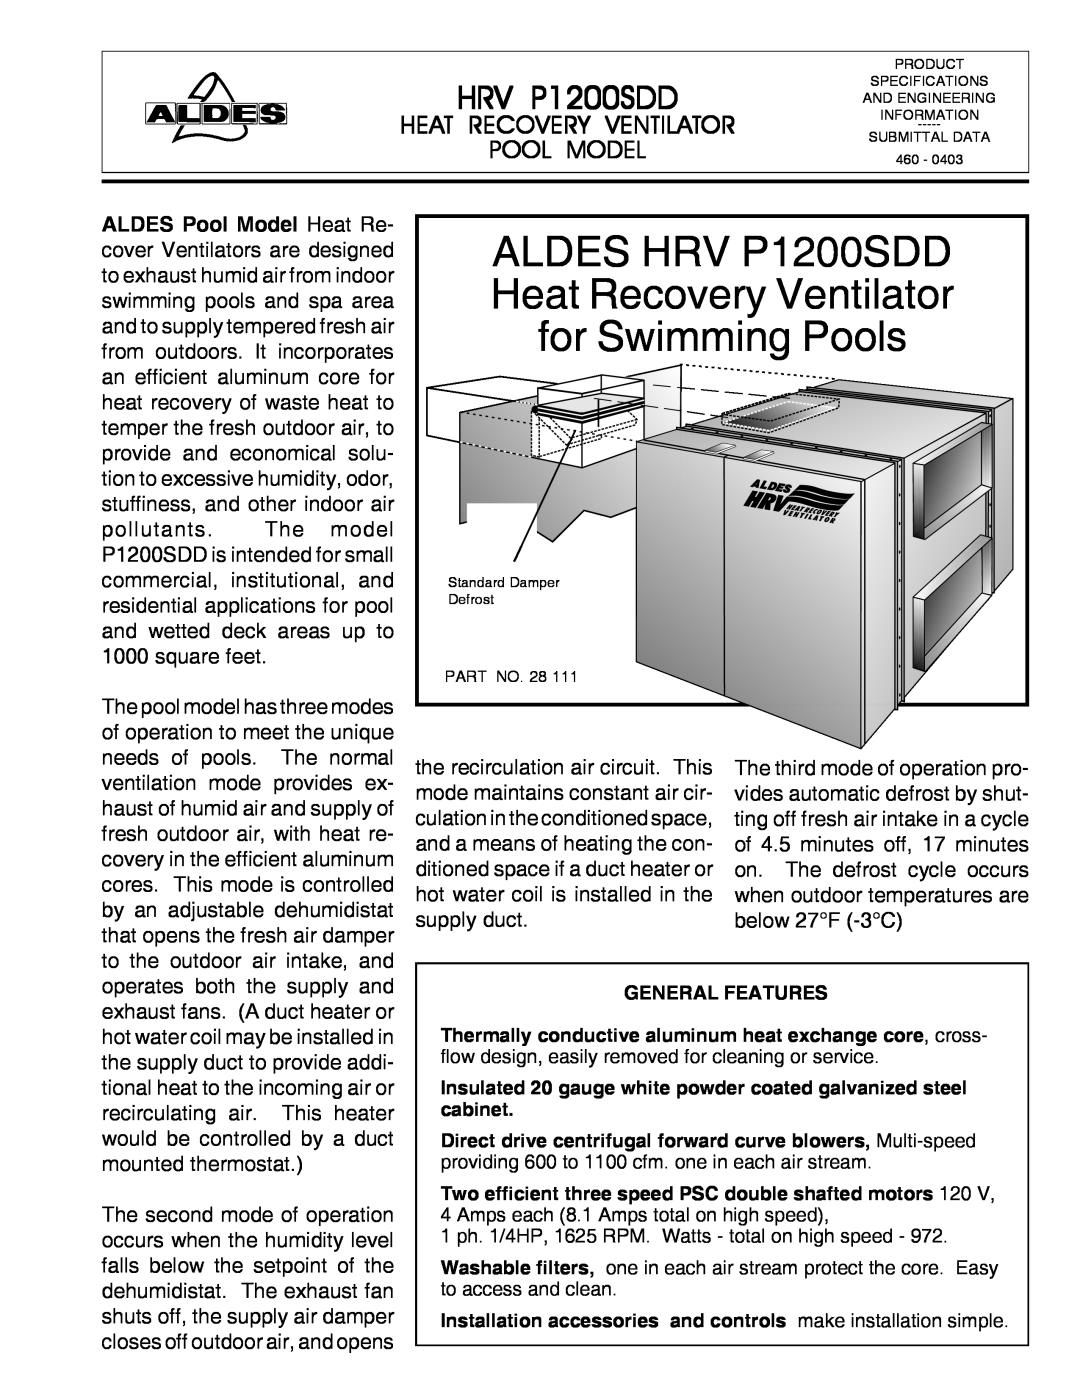 American Aldes HRV 700SFD, HRV 700SDD manual ALDES HRV P1200SDD, for Swimming Pools, Heat Recovery Ventilator 